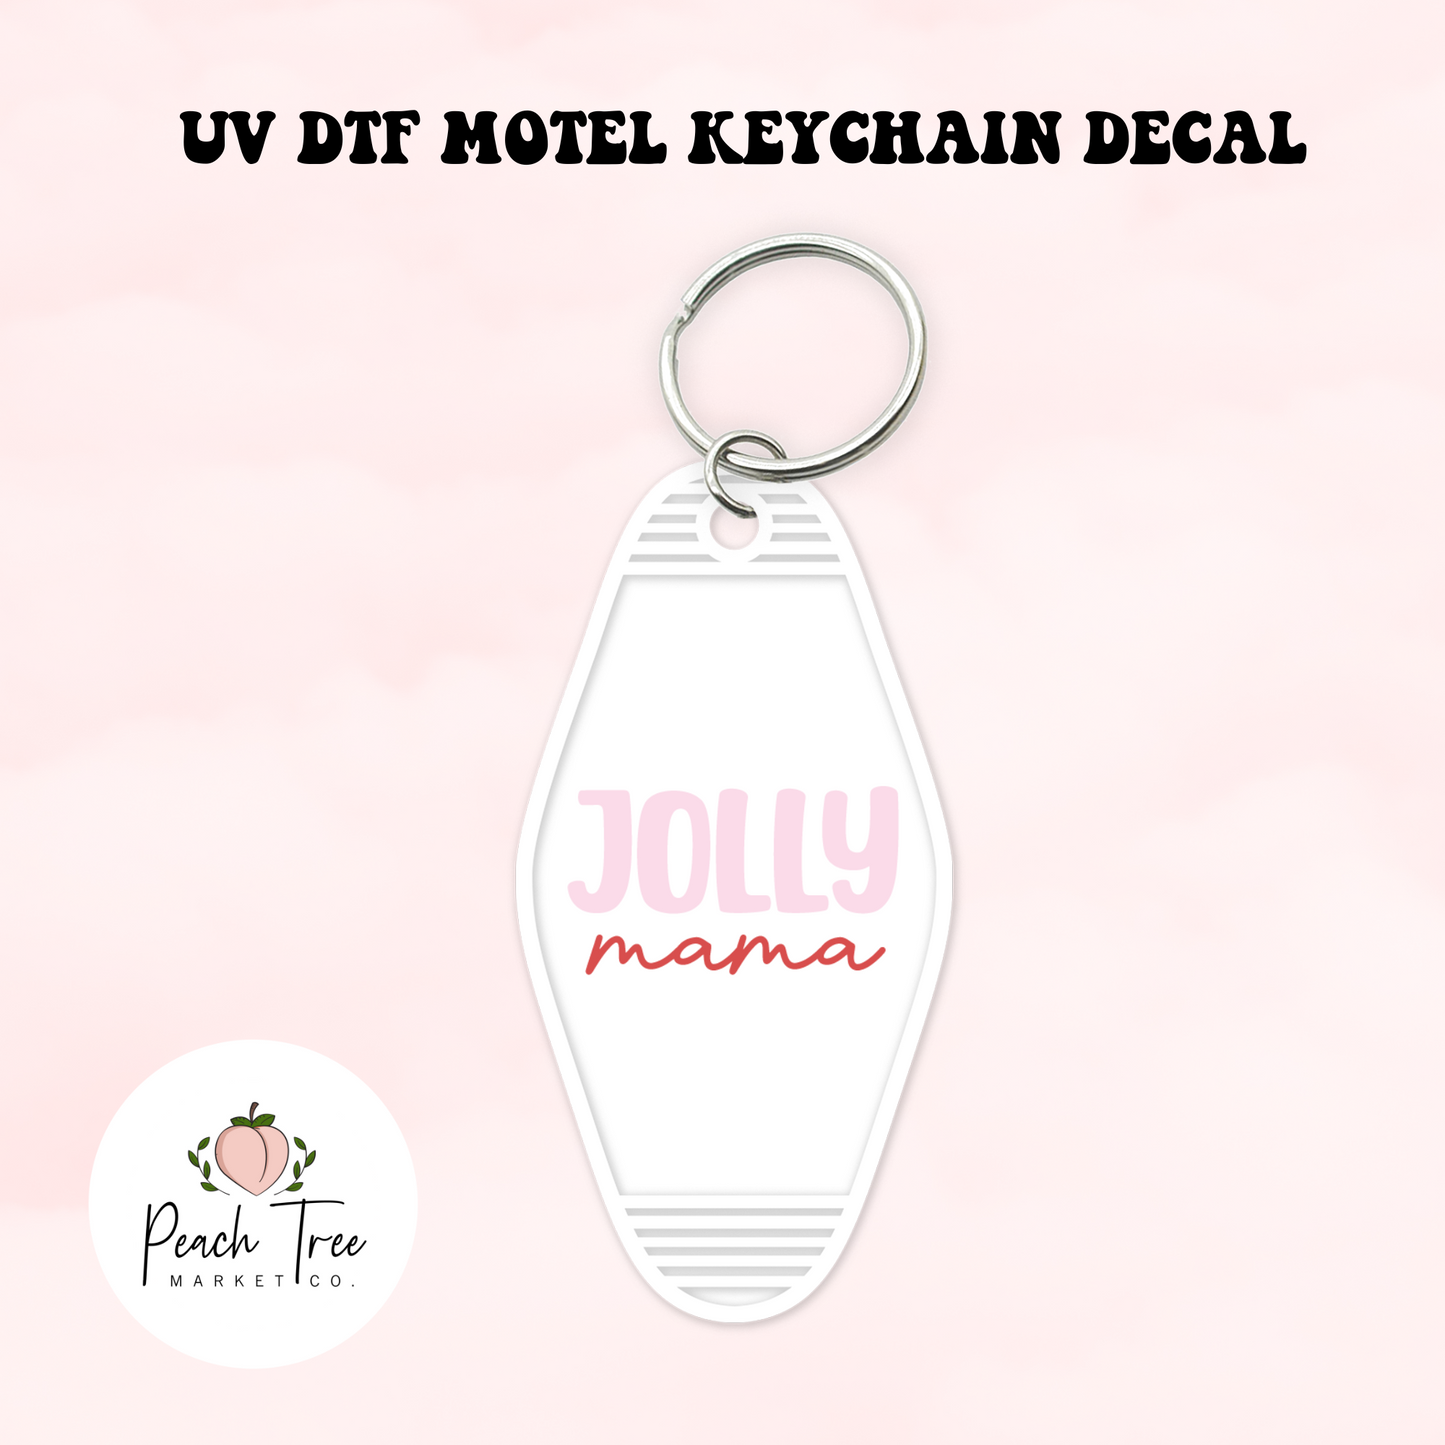 Jolly Mama UV DTF Motel Keychain Decal